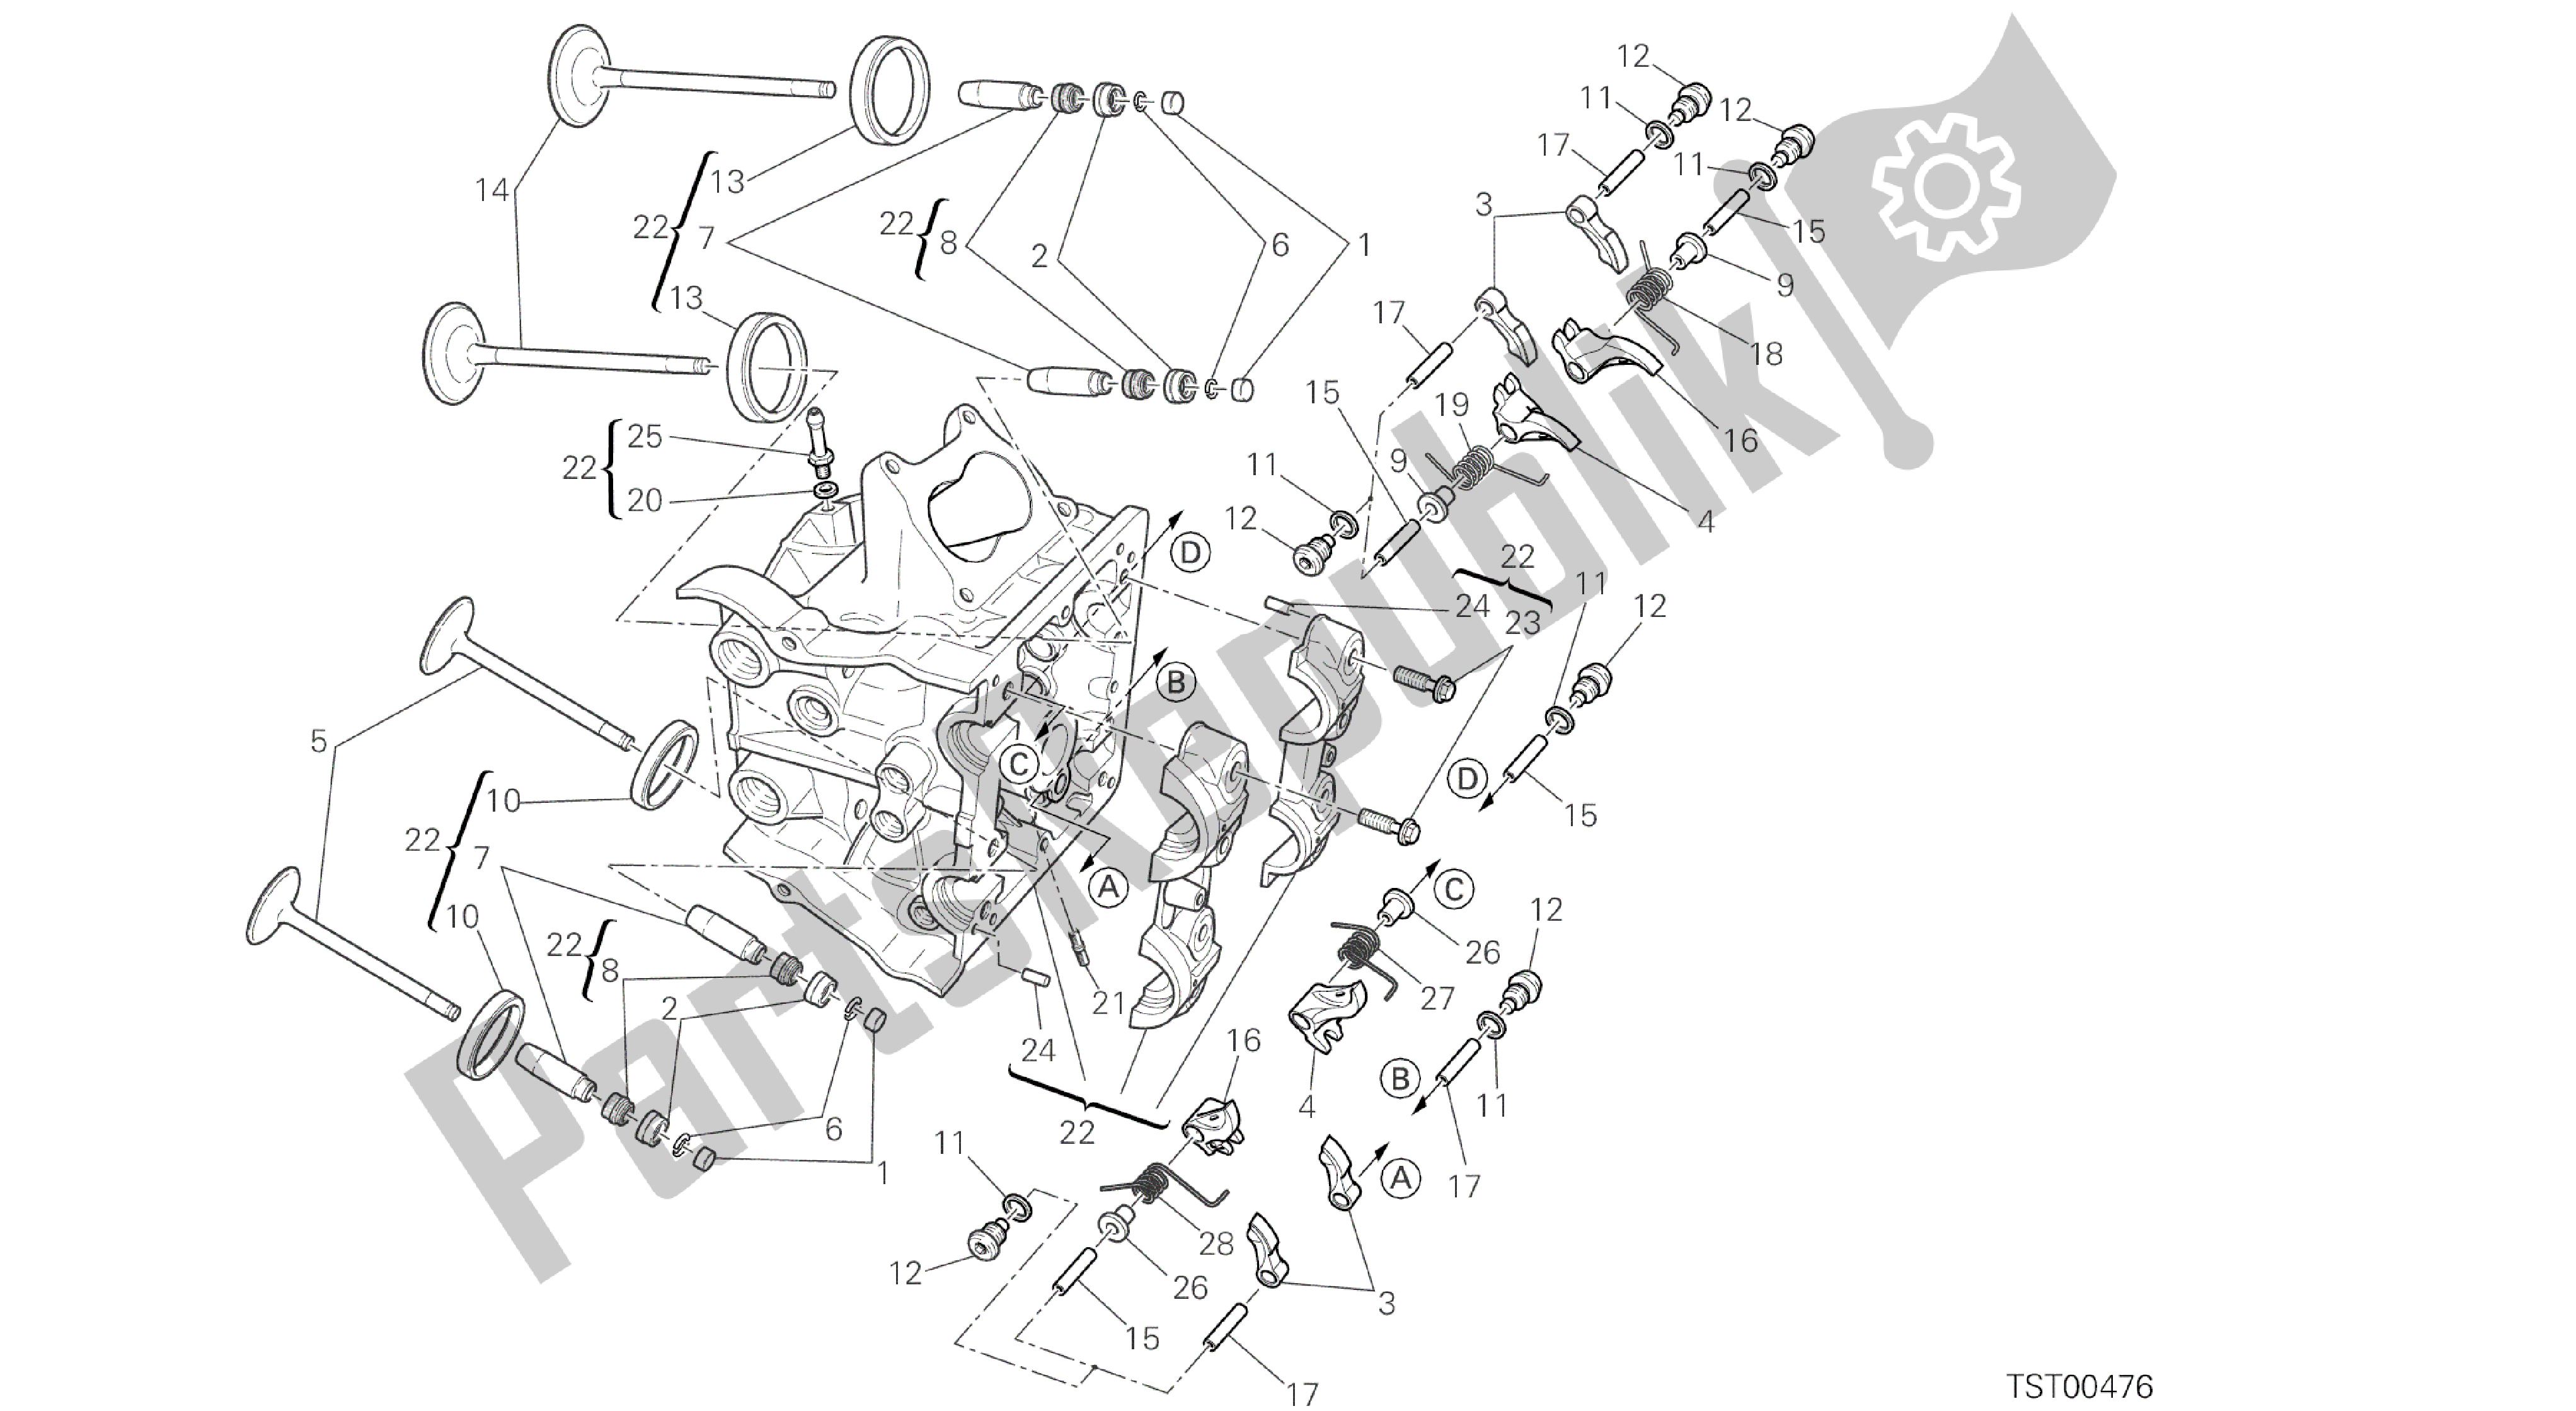 Alle onderdelen voor de Tekening 015 - Horizontale Cilinderkop [mod: Ms1200pp; Xst: Aus, Eur, Fra, Jap, Tha] Groepsmotor van de Ducati Multistrada S Pikes Peak 1200 2014